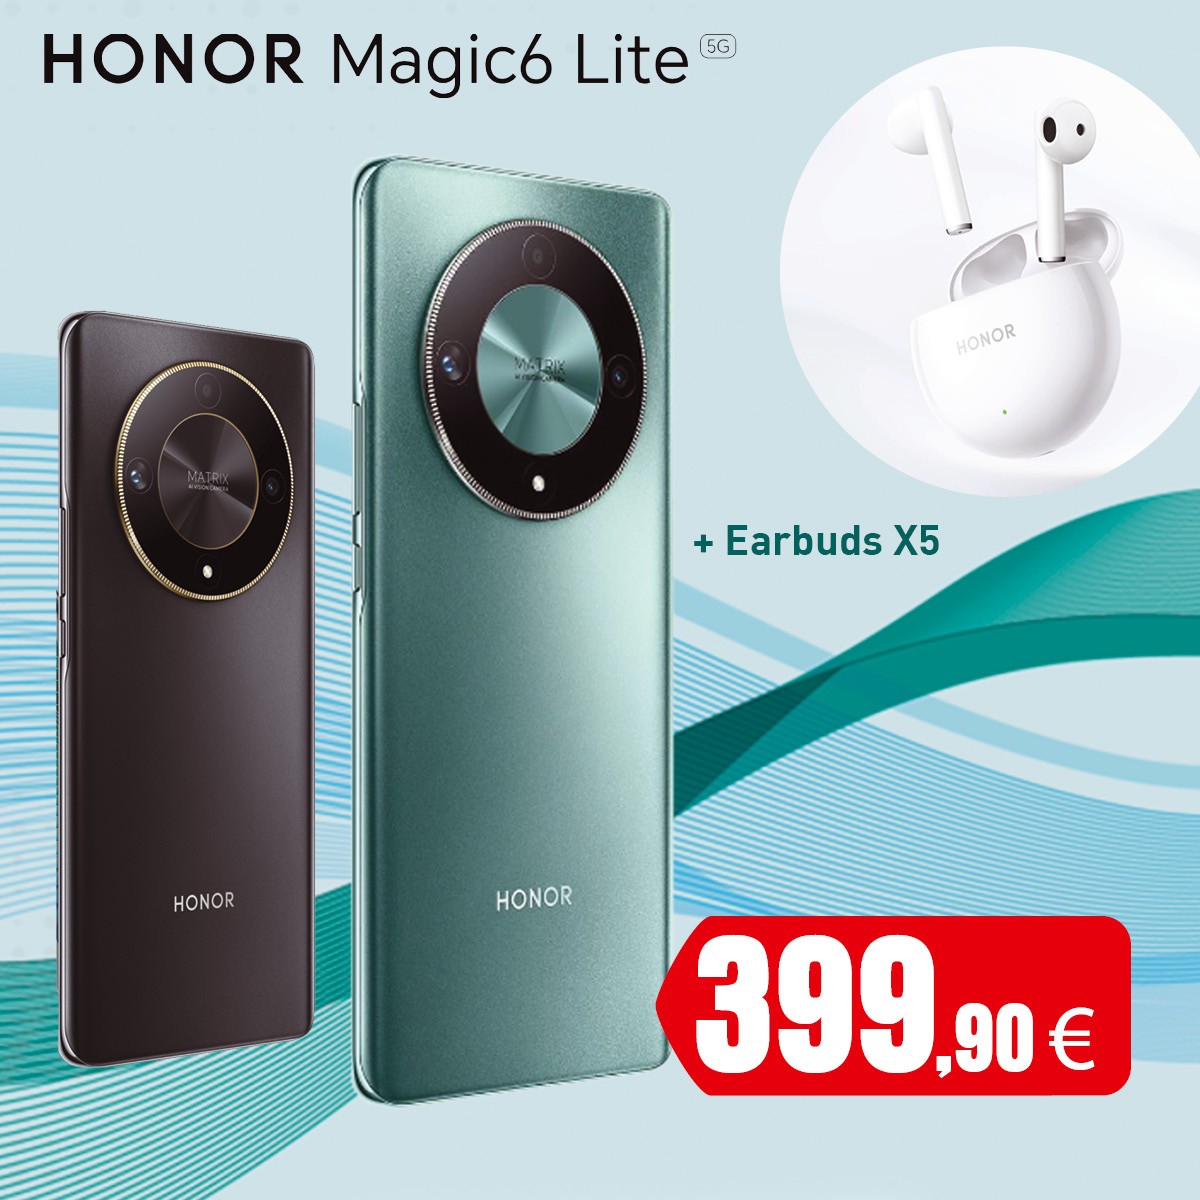 Honor Magic6 Lite ostuga kingituseks Choice Earbuds X5